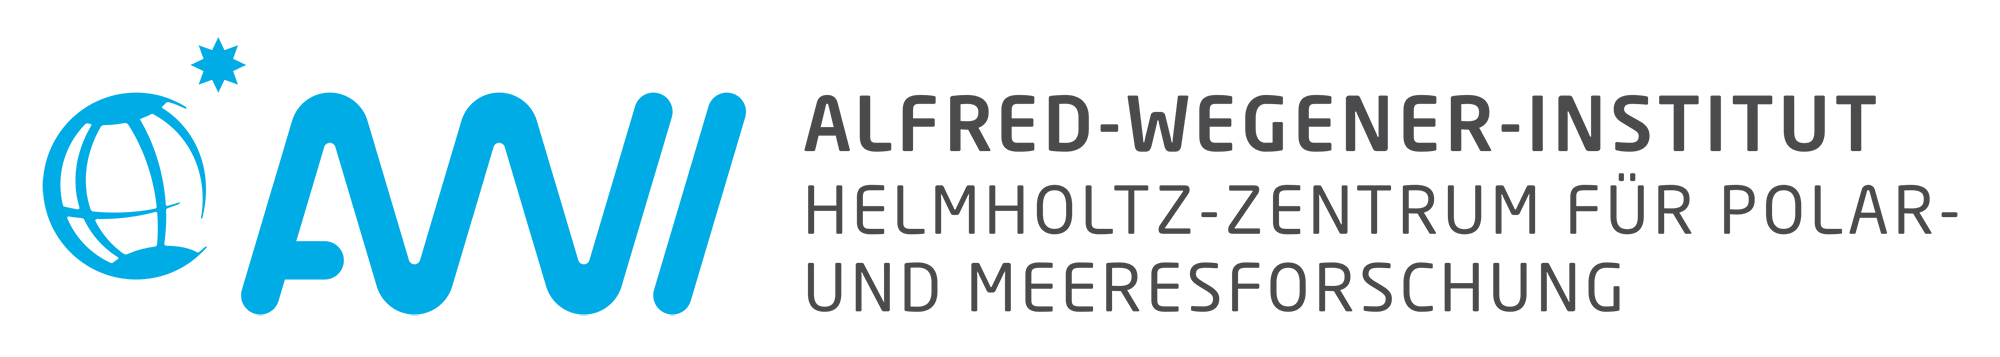 Alfred-Wegener-Institut Niederlassung 2